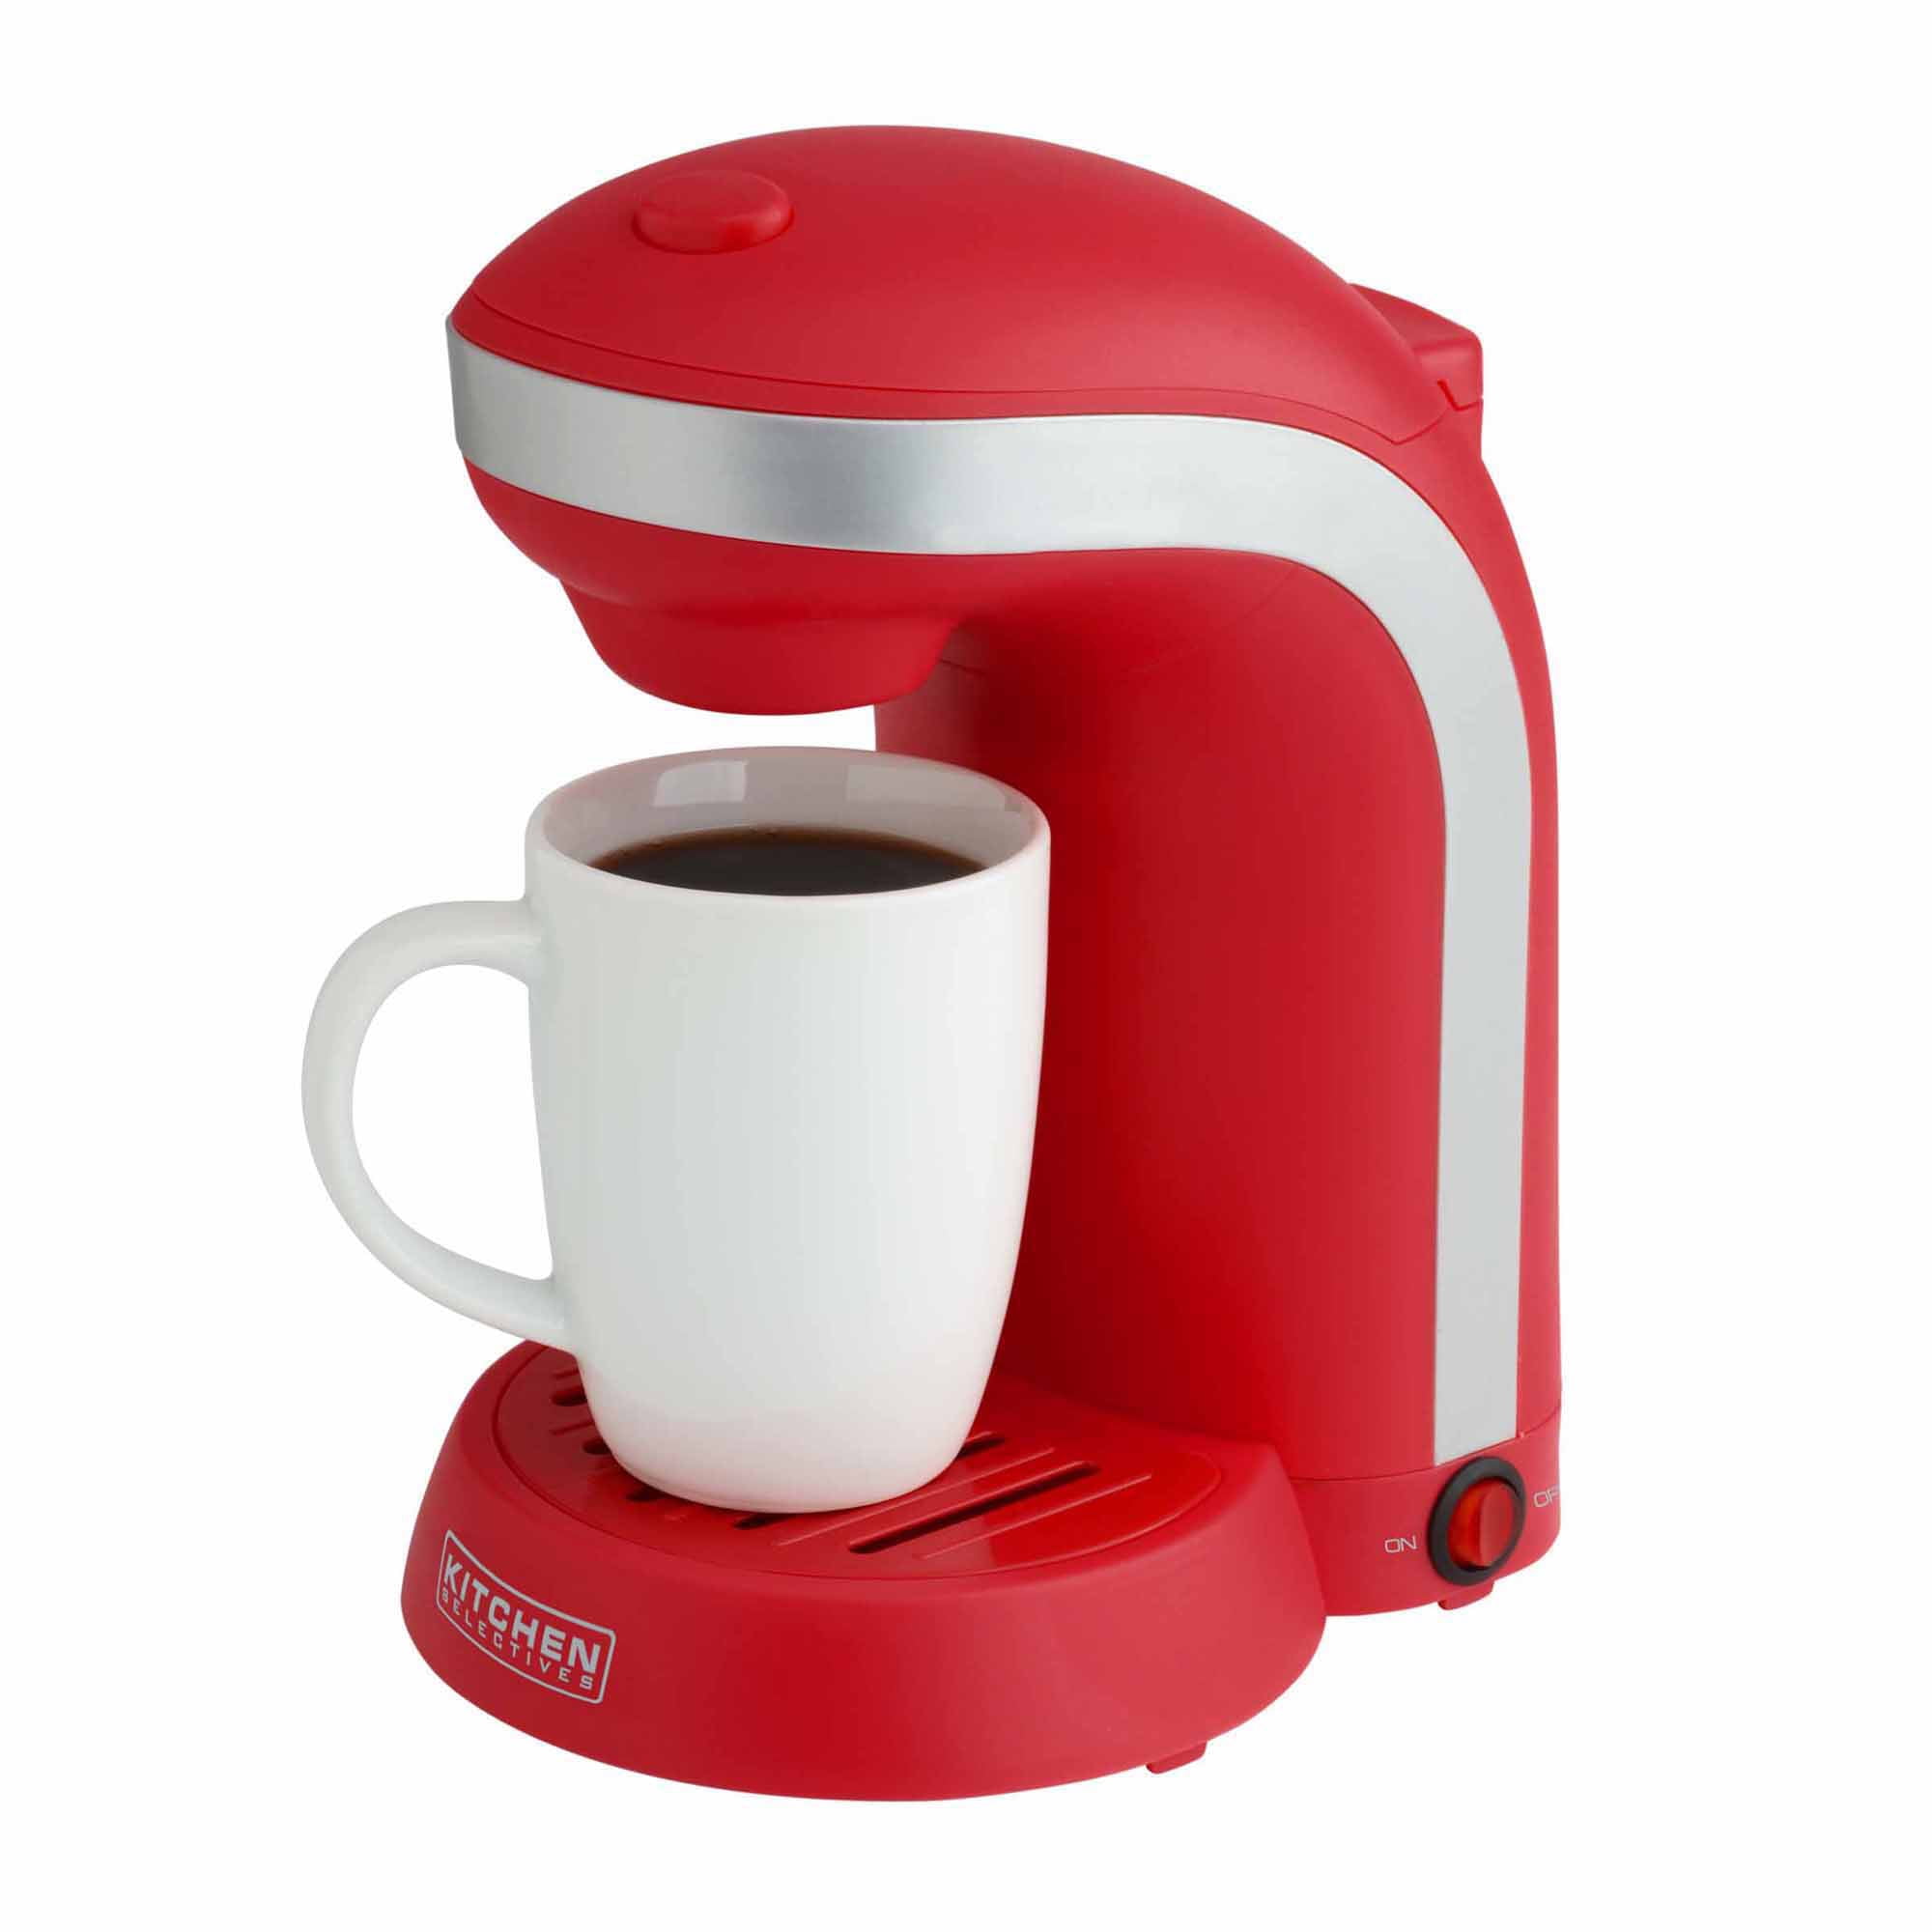 Kitchen Selectives Single Drip Coffee Maker with Mug, New, Model